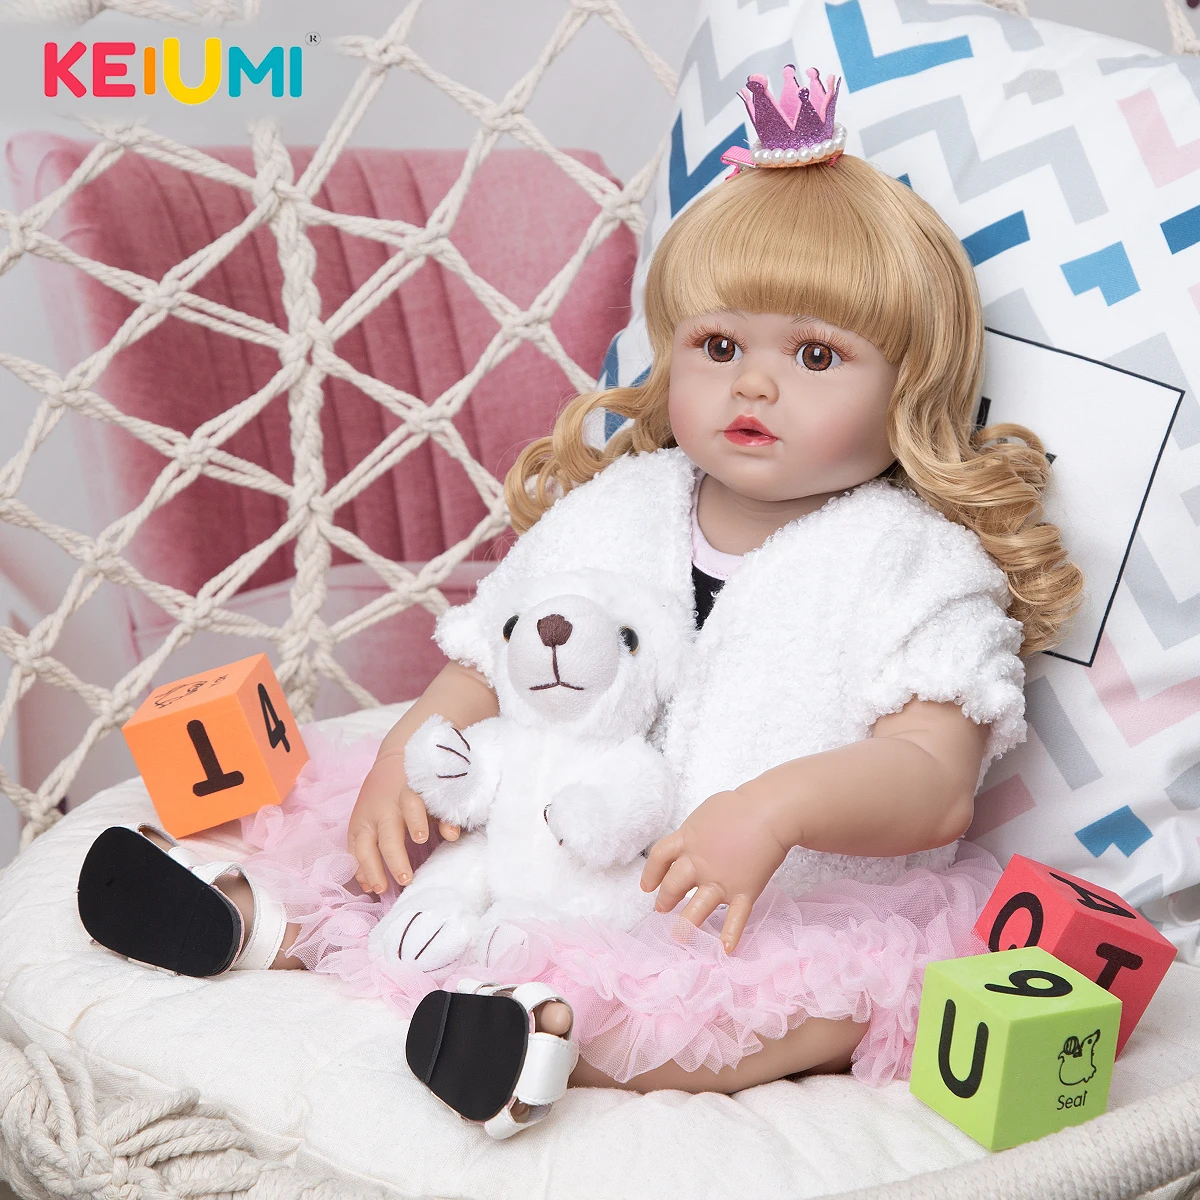 Keiumi Boneca Bebê Reborn 57cm Original Loira Corpo Silicone Banho